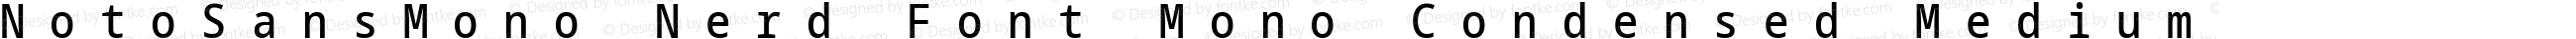 Noto Sans Mono Condensed Medium Nerd Font Complete Mono